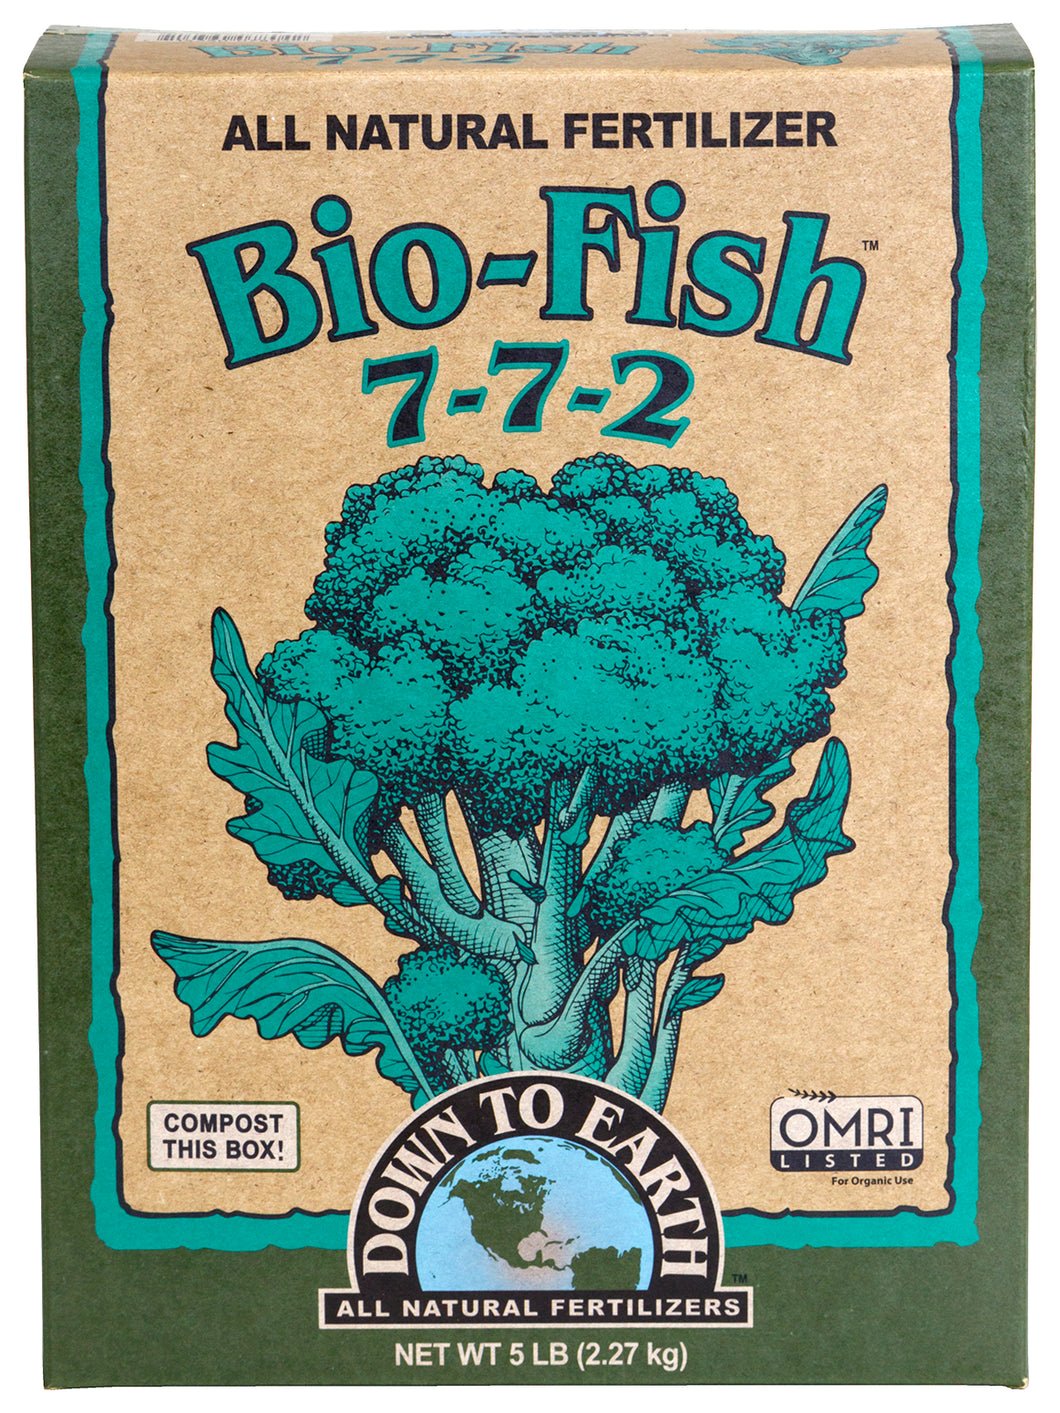 Down To Earth Bio-Fish 7 - 7 - 2 5lb